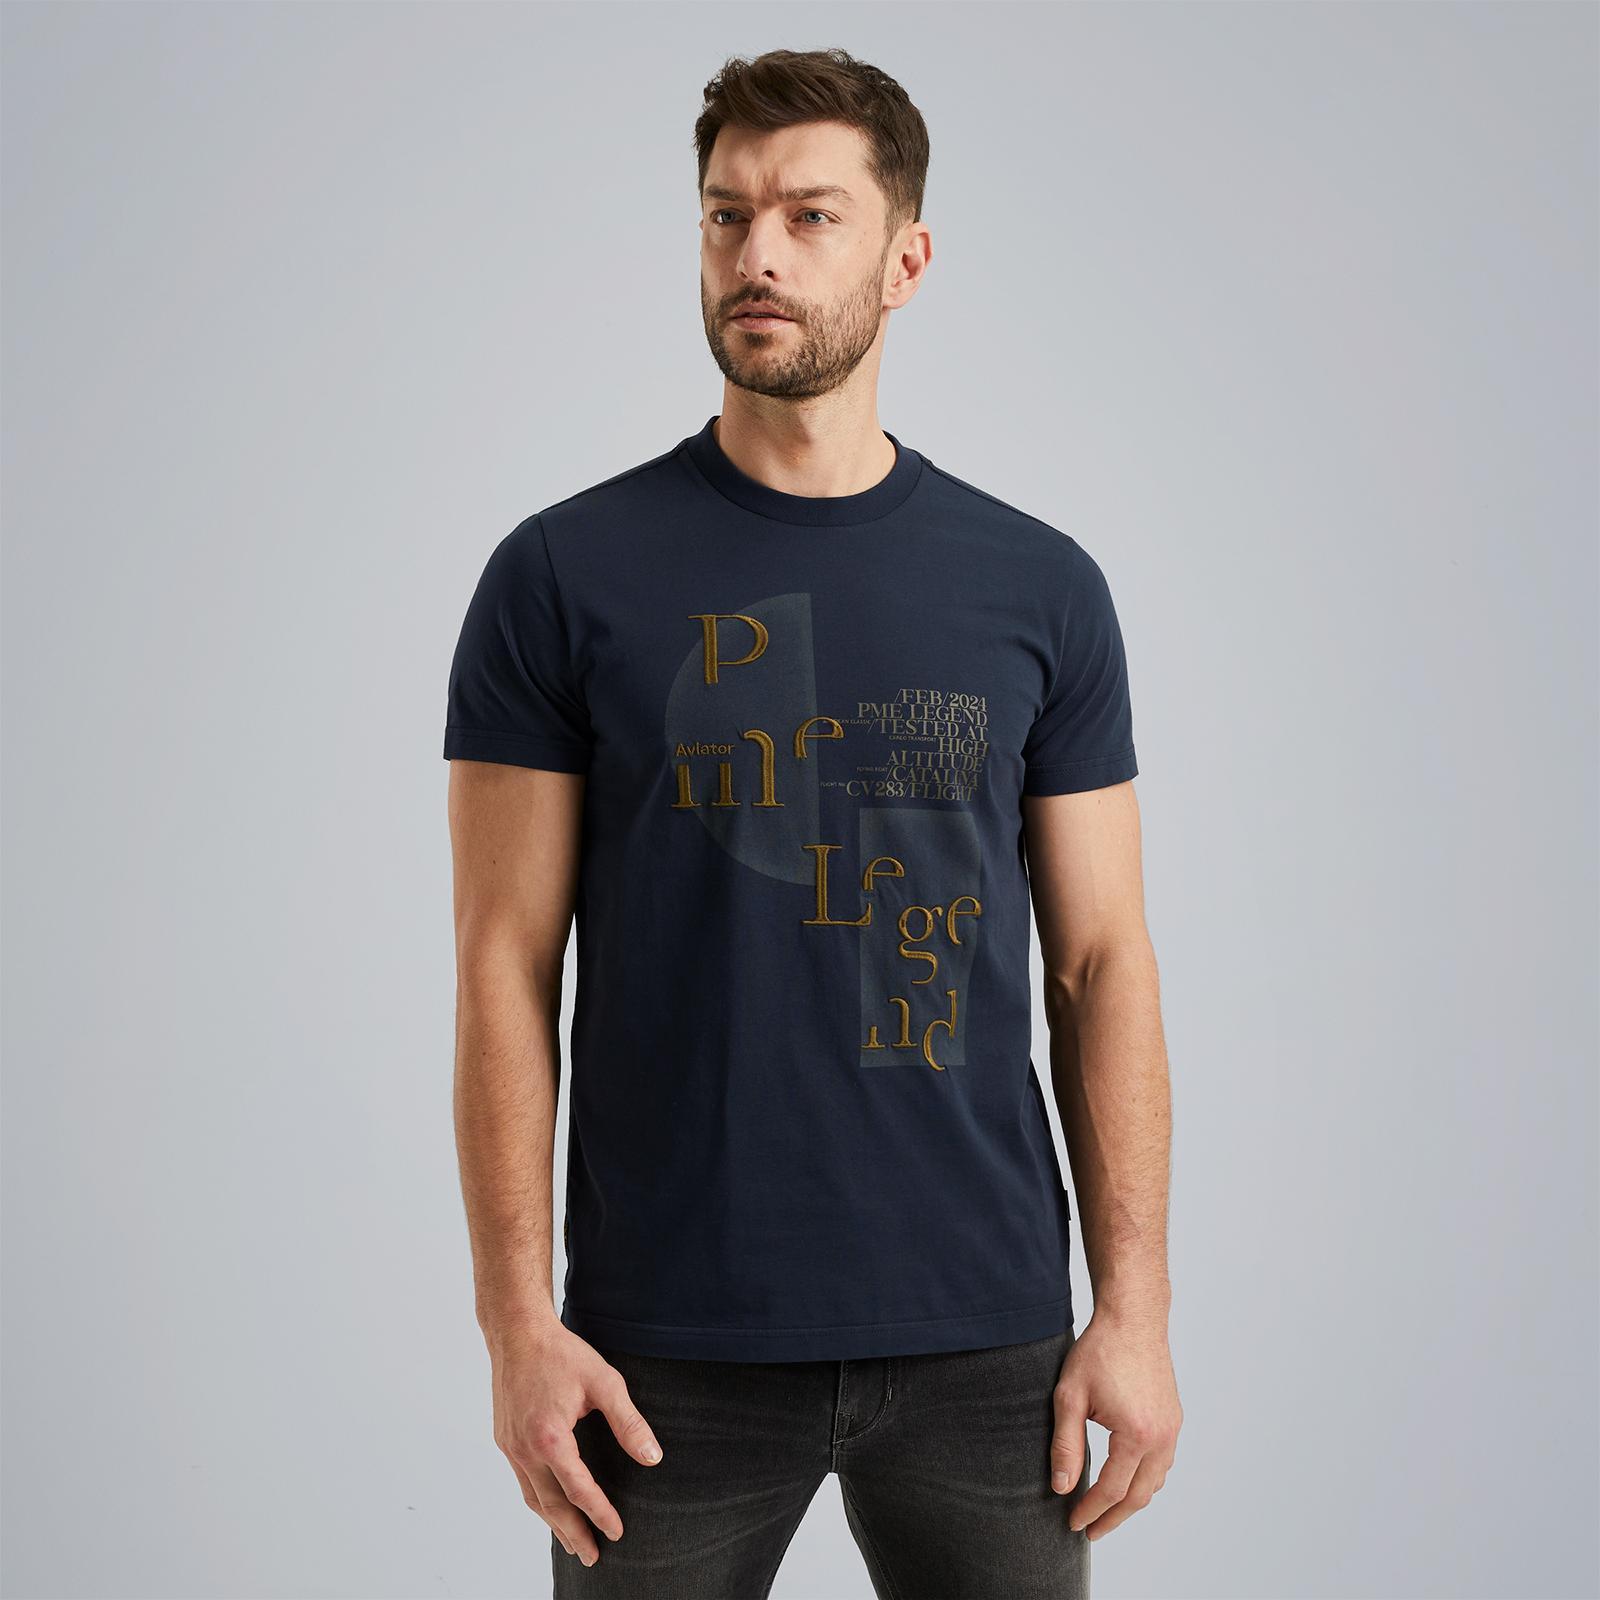 PME Legend regular fit T-shirt met printopdruk donkerblauw